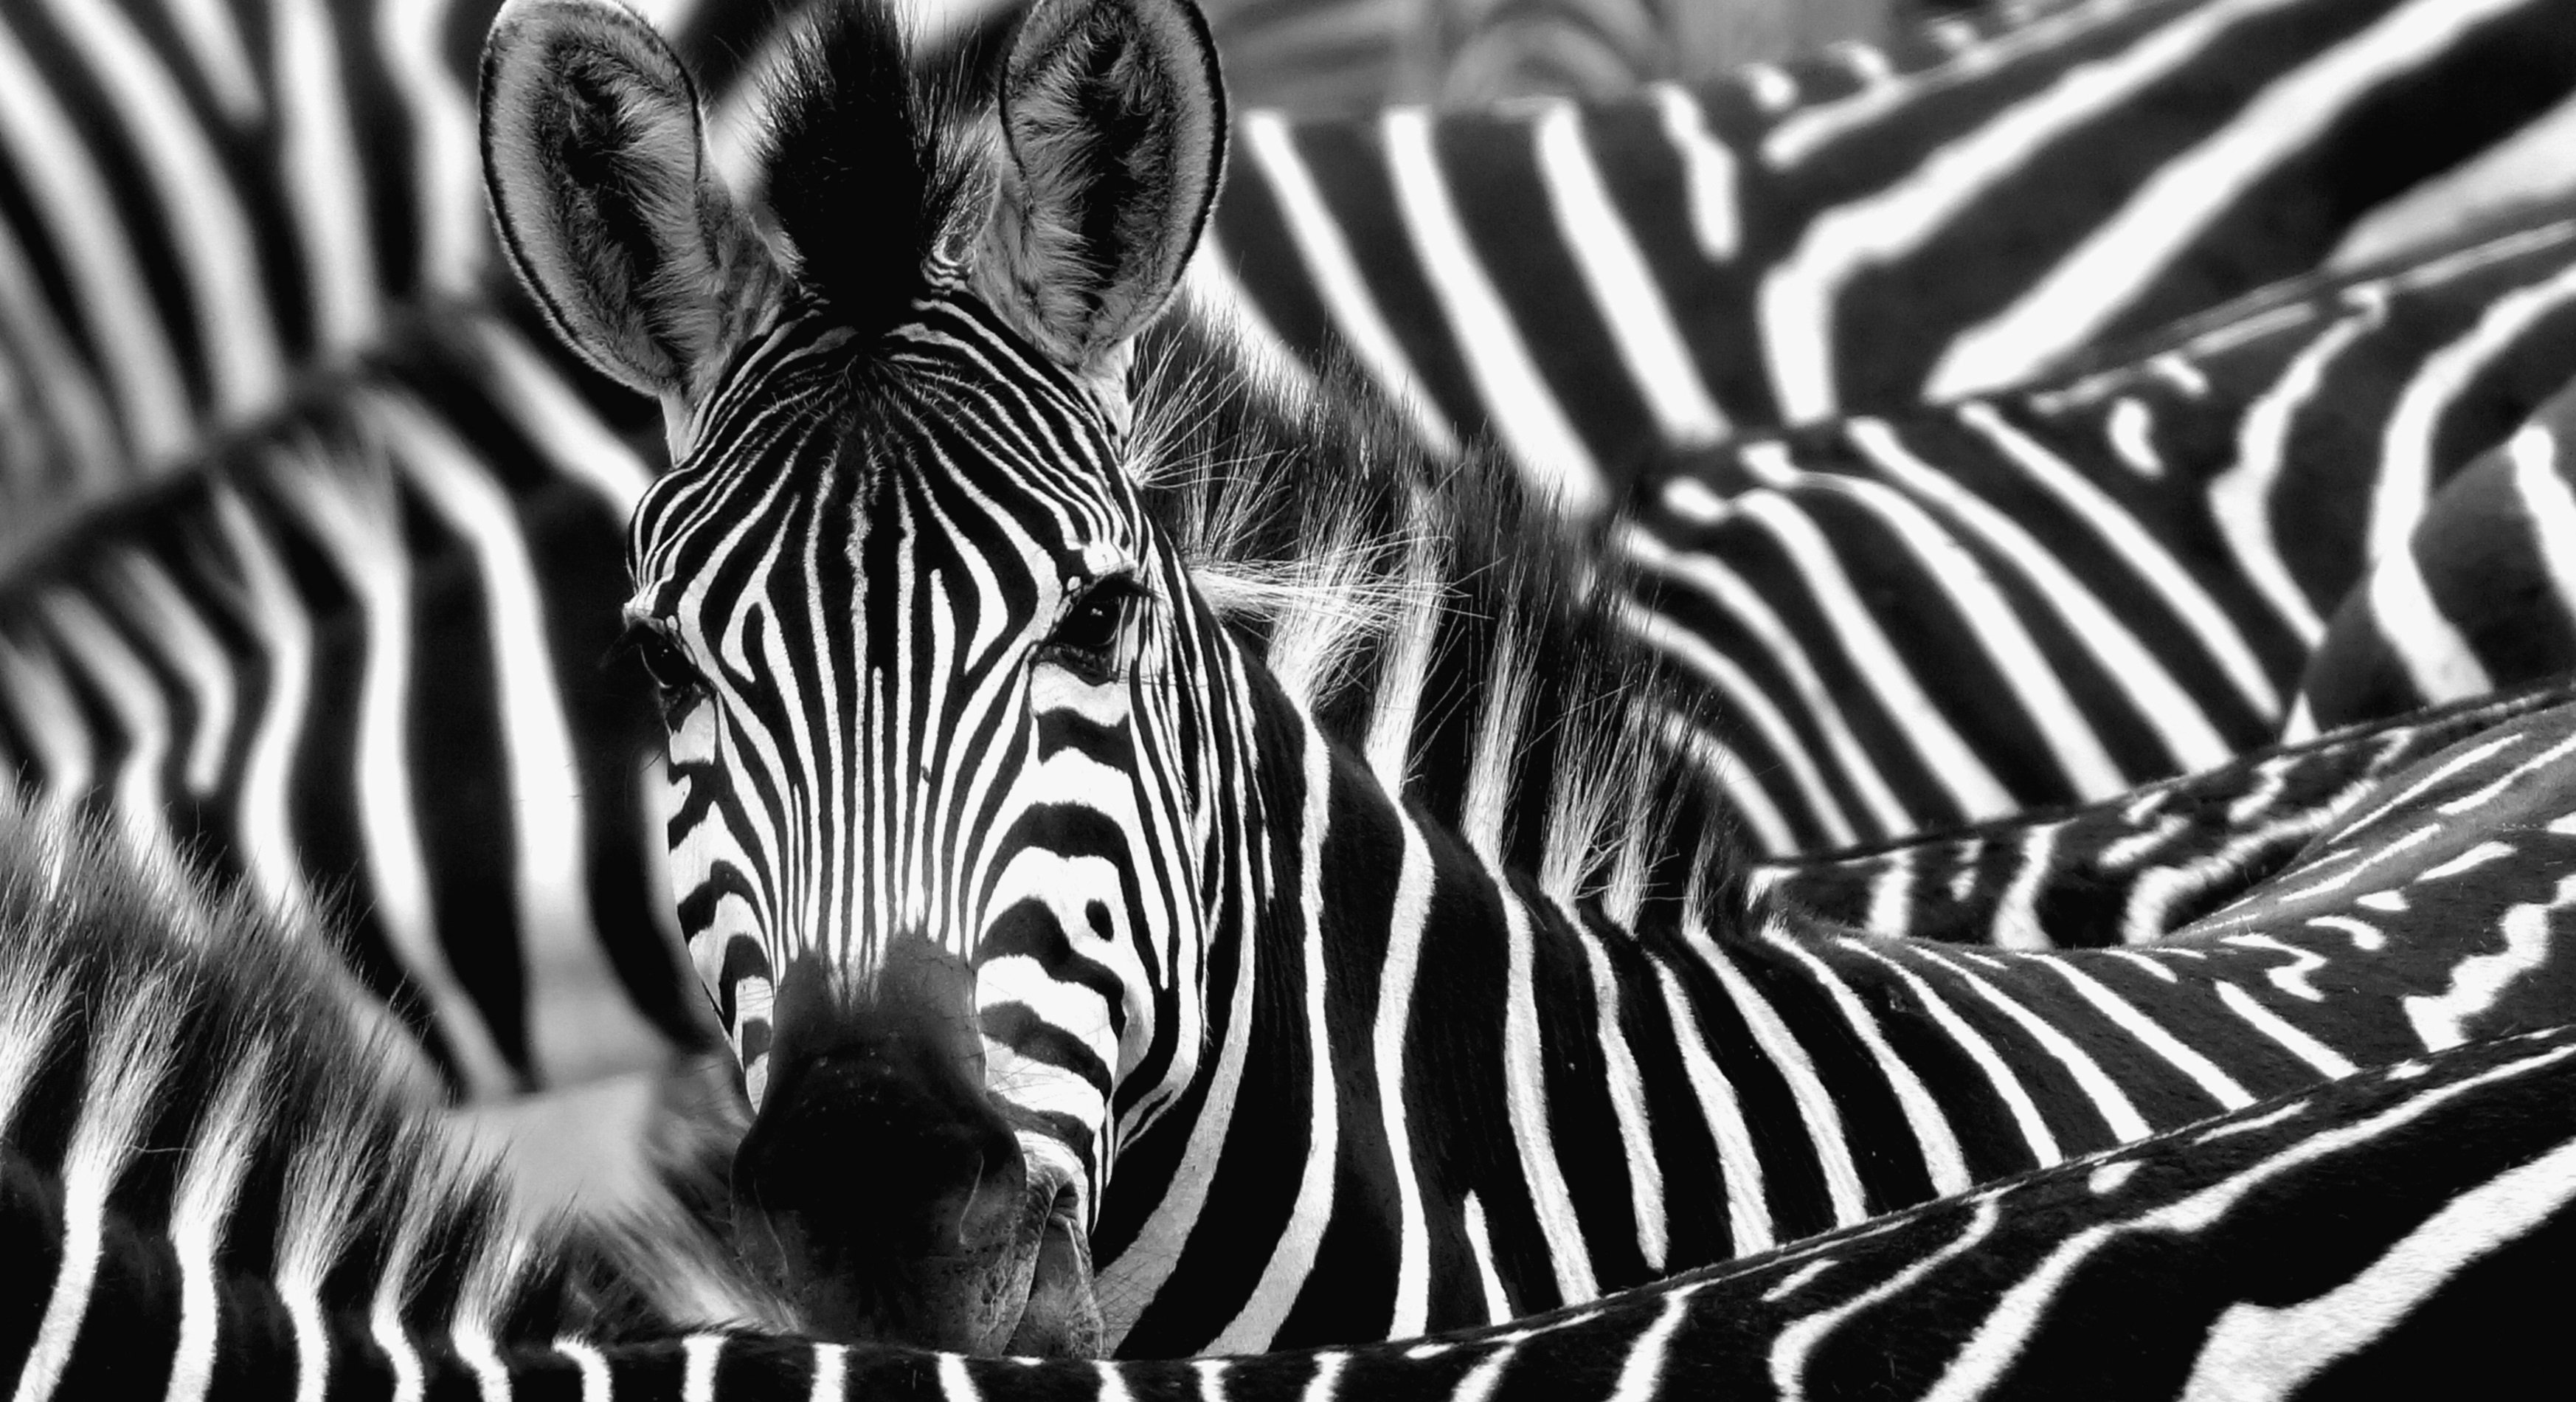 Picture of a Zebra